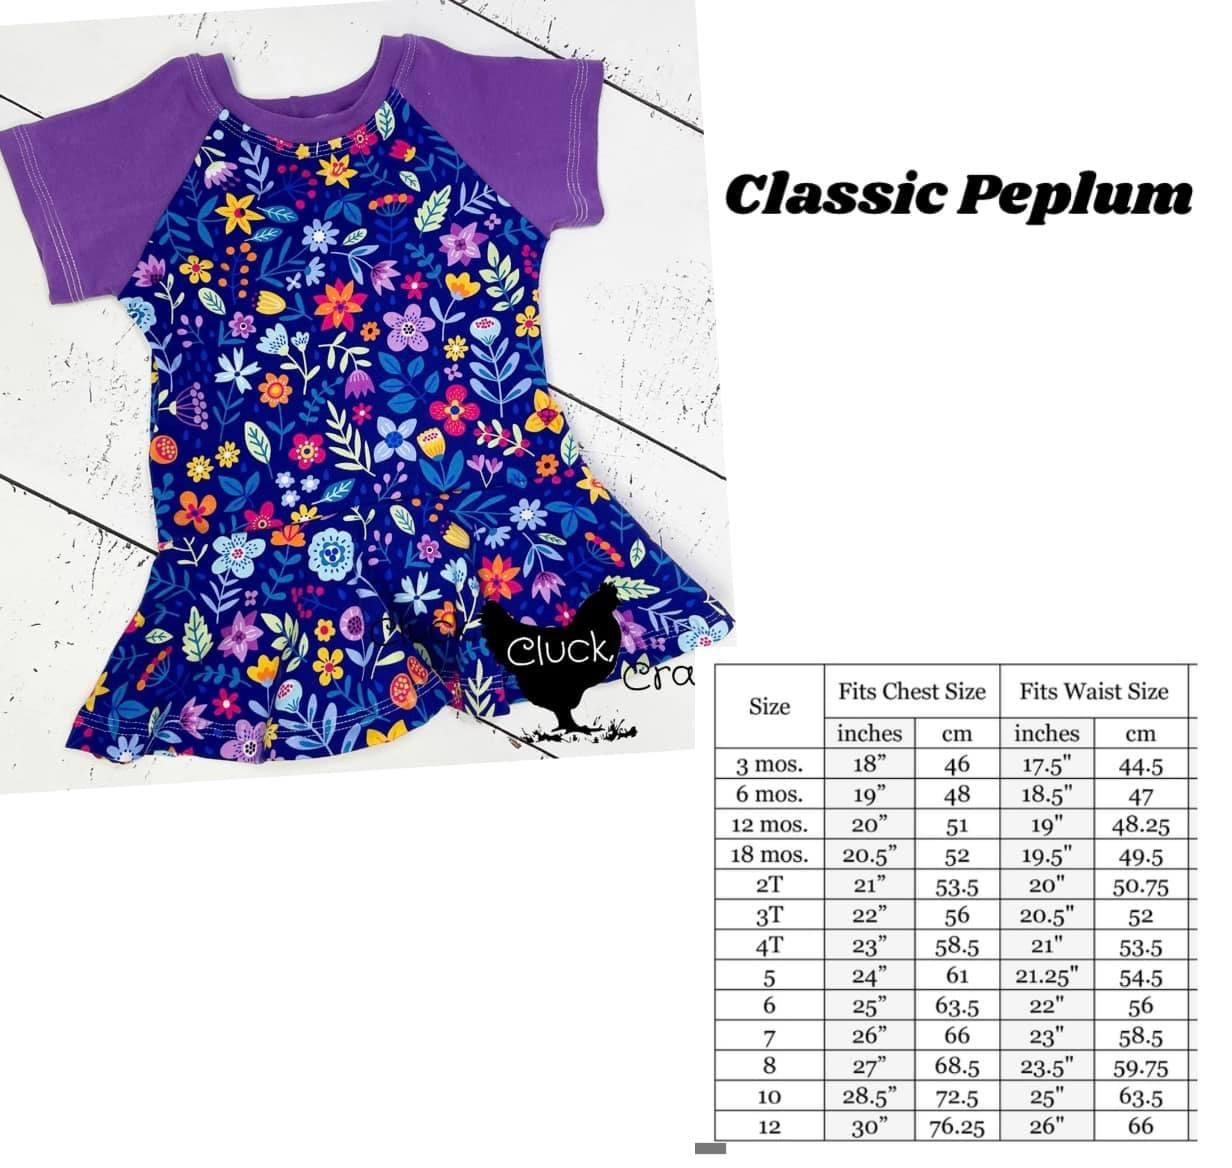 Classic Peplum, Mermaid Scales